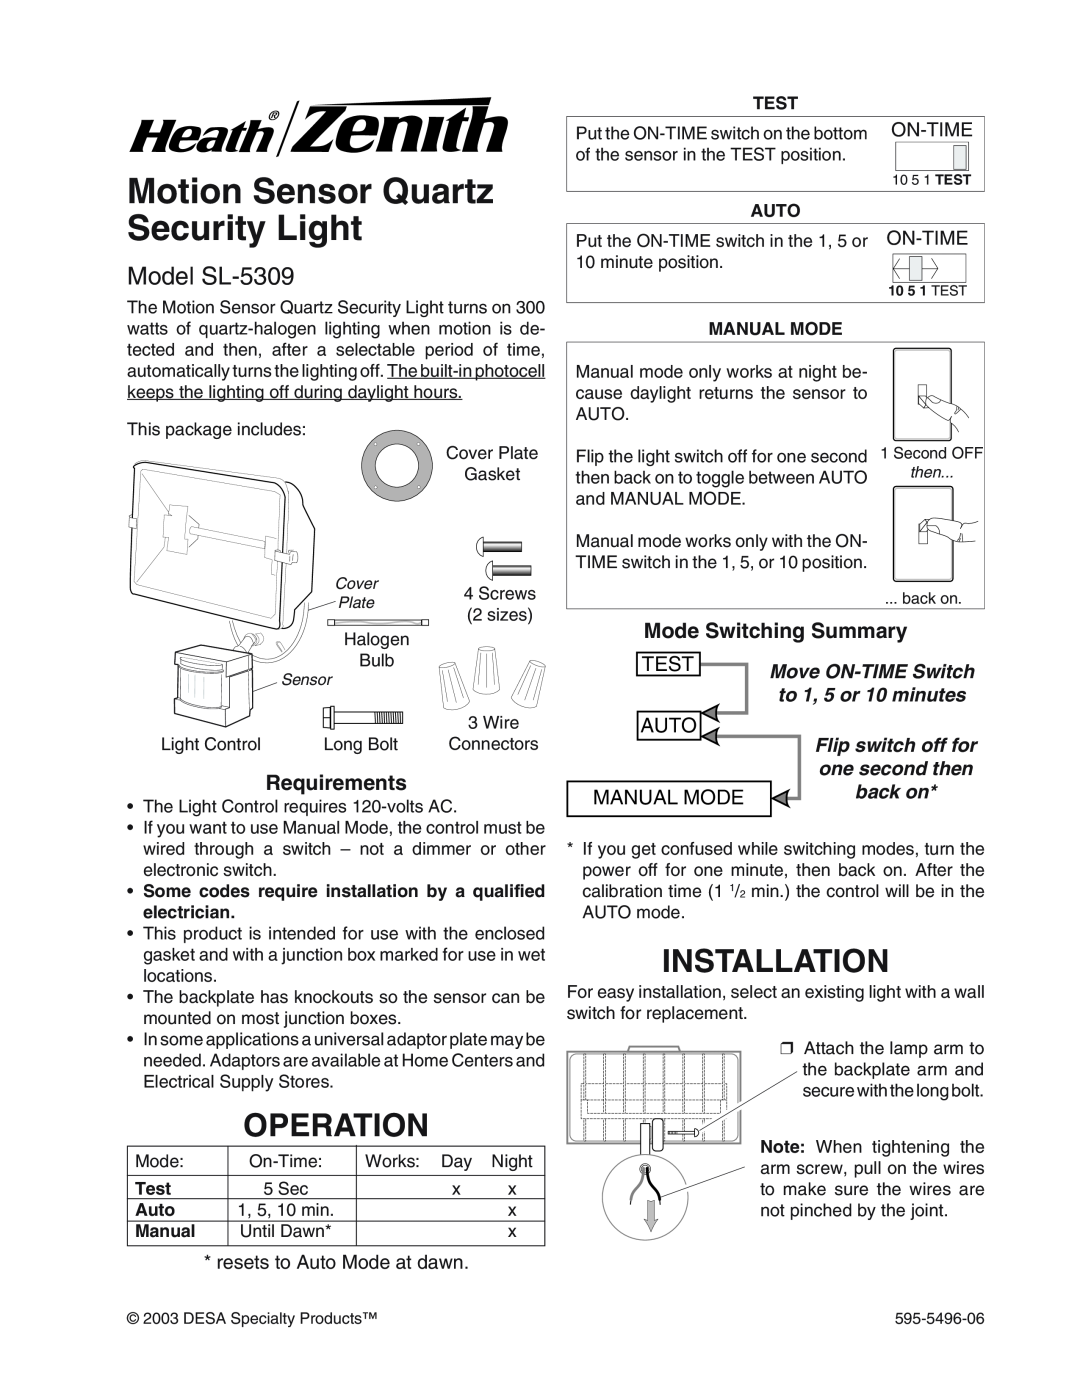 Heath Zenith manual Motion Sensor Quartz Security Light, Operation, Installation, Model SL-5309, Requirements, On-Time 